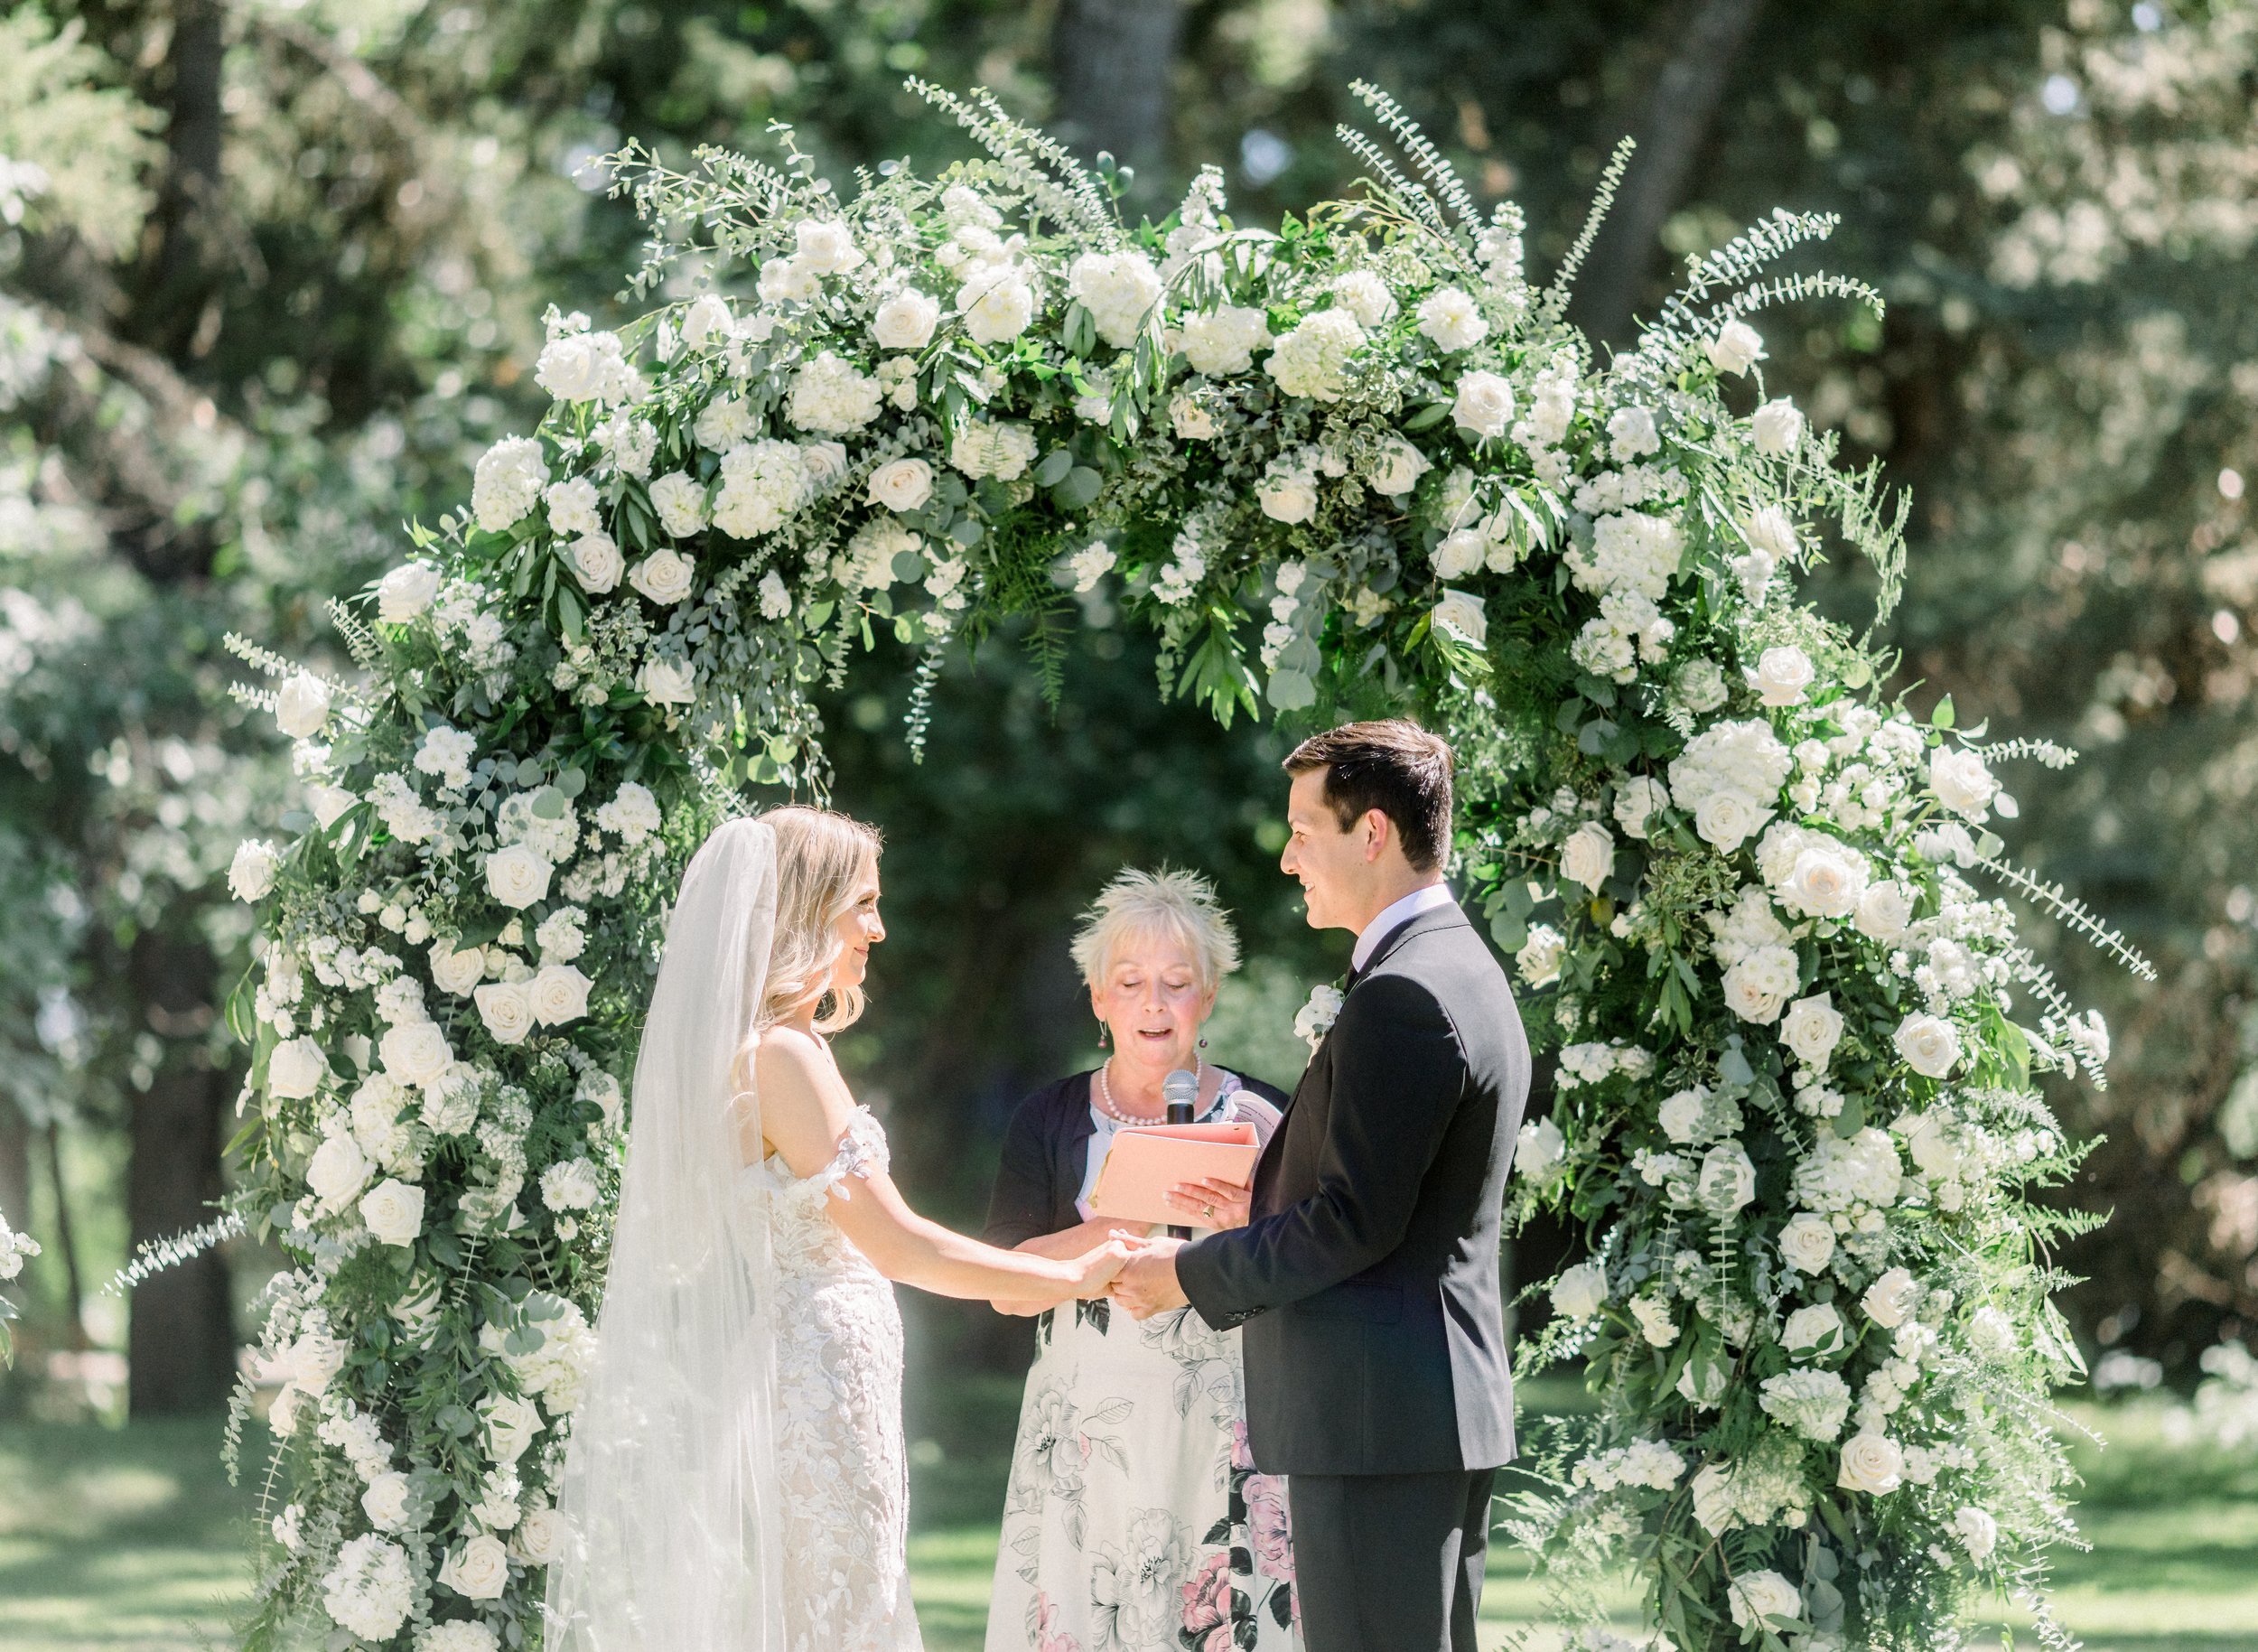 April + Brett // A Beautiful Summer Wedding at The Norland Historic Estate